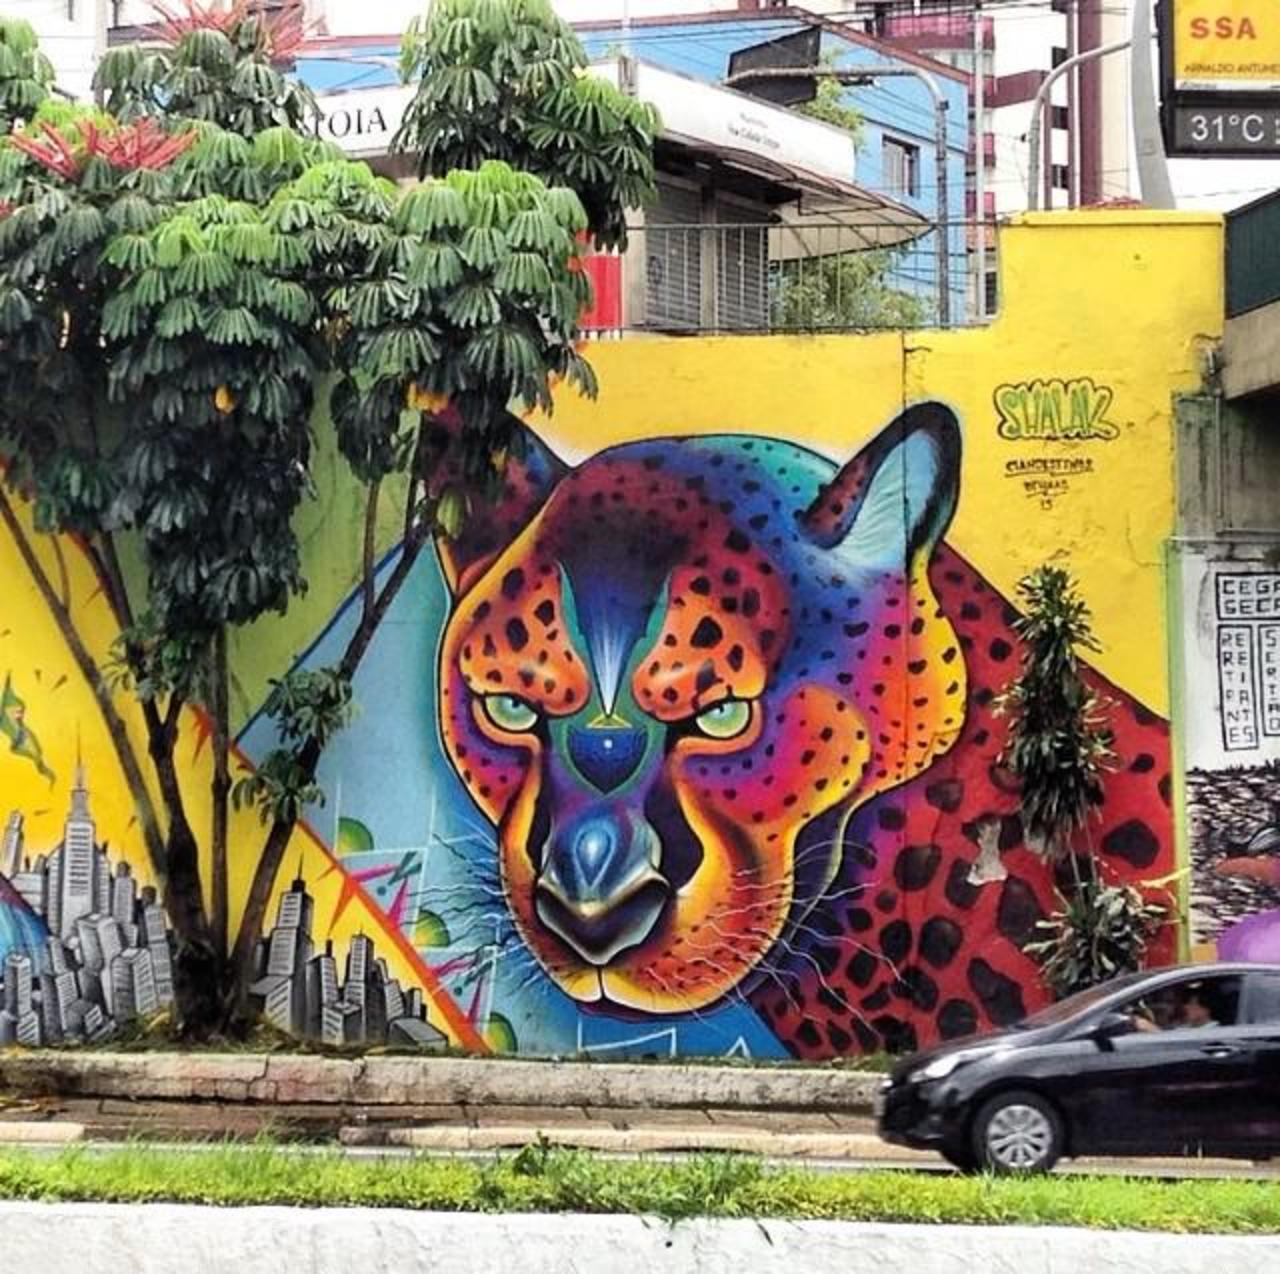 Artist ShalakAttack beautiful & colourful nature in Street Art piece in São Paulo 

#art #graffiti #mural #streetart http://t.co/cvwkQxCRe5